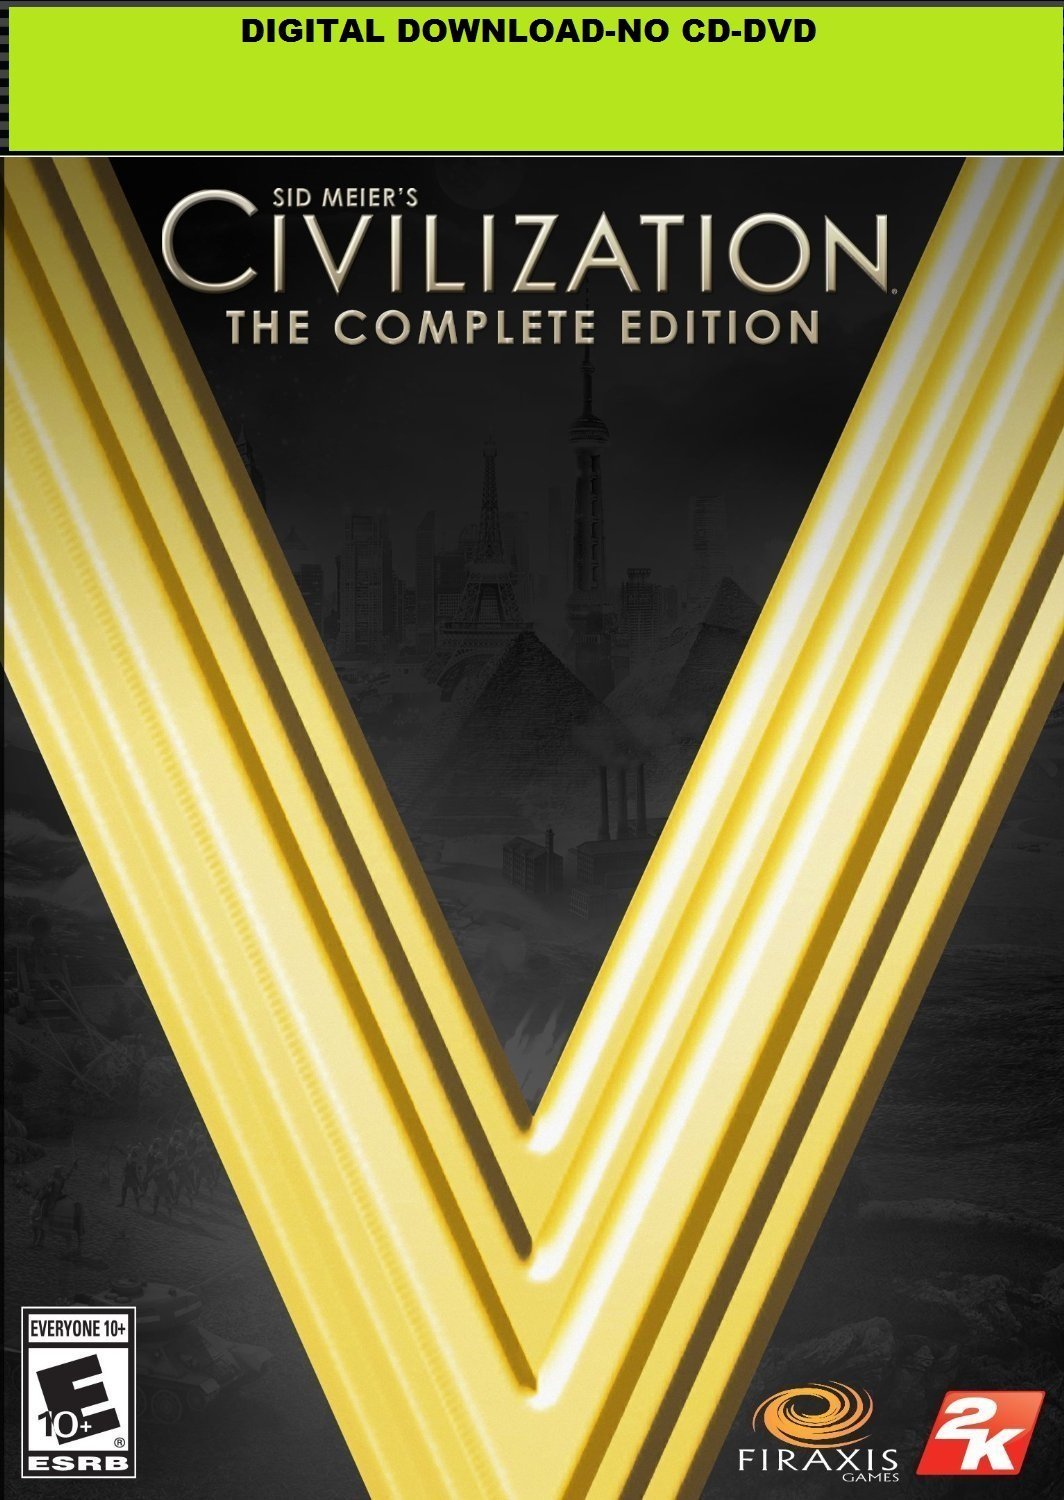 Sid Meier's Civilization V STEAM TOP 100 GAMES – 4 